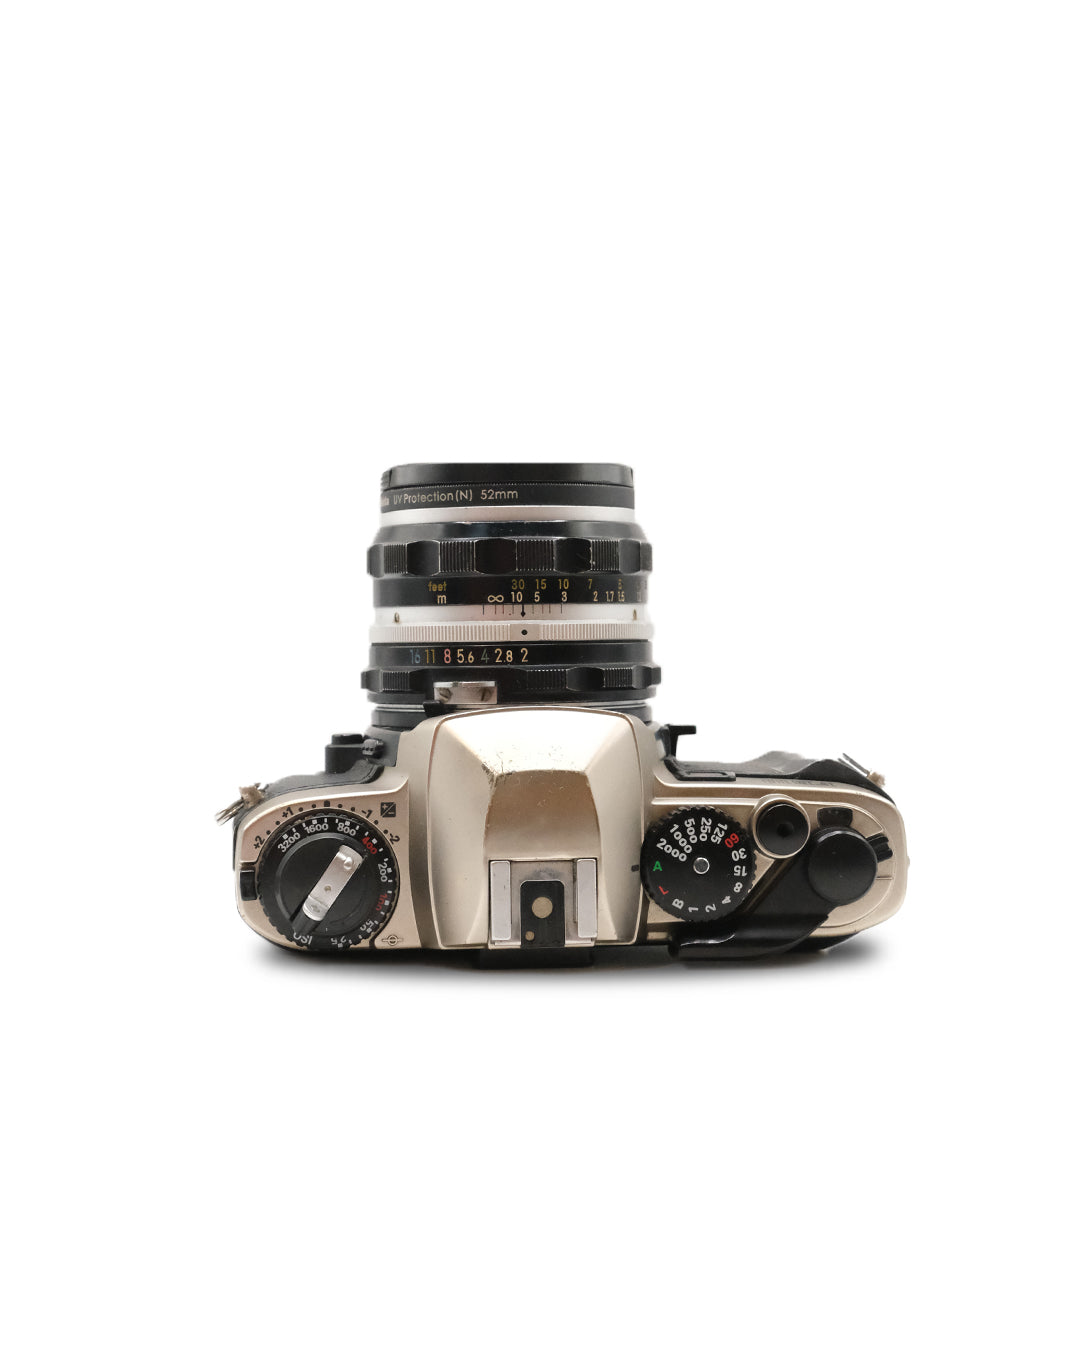 Nikon Fe10 with 35-70mm Lens